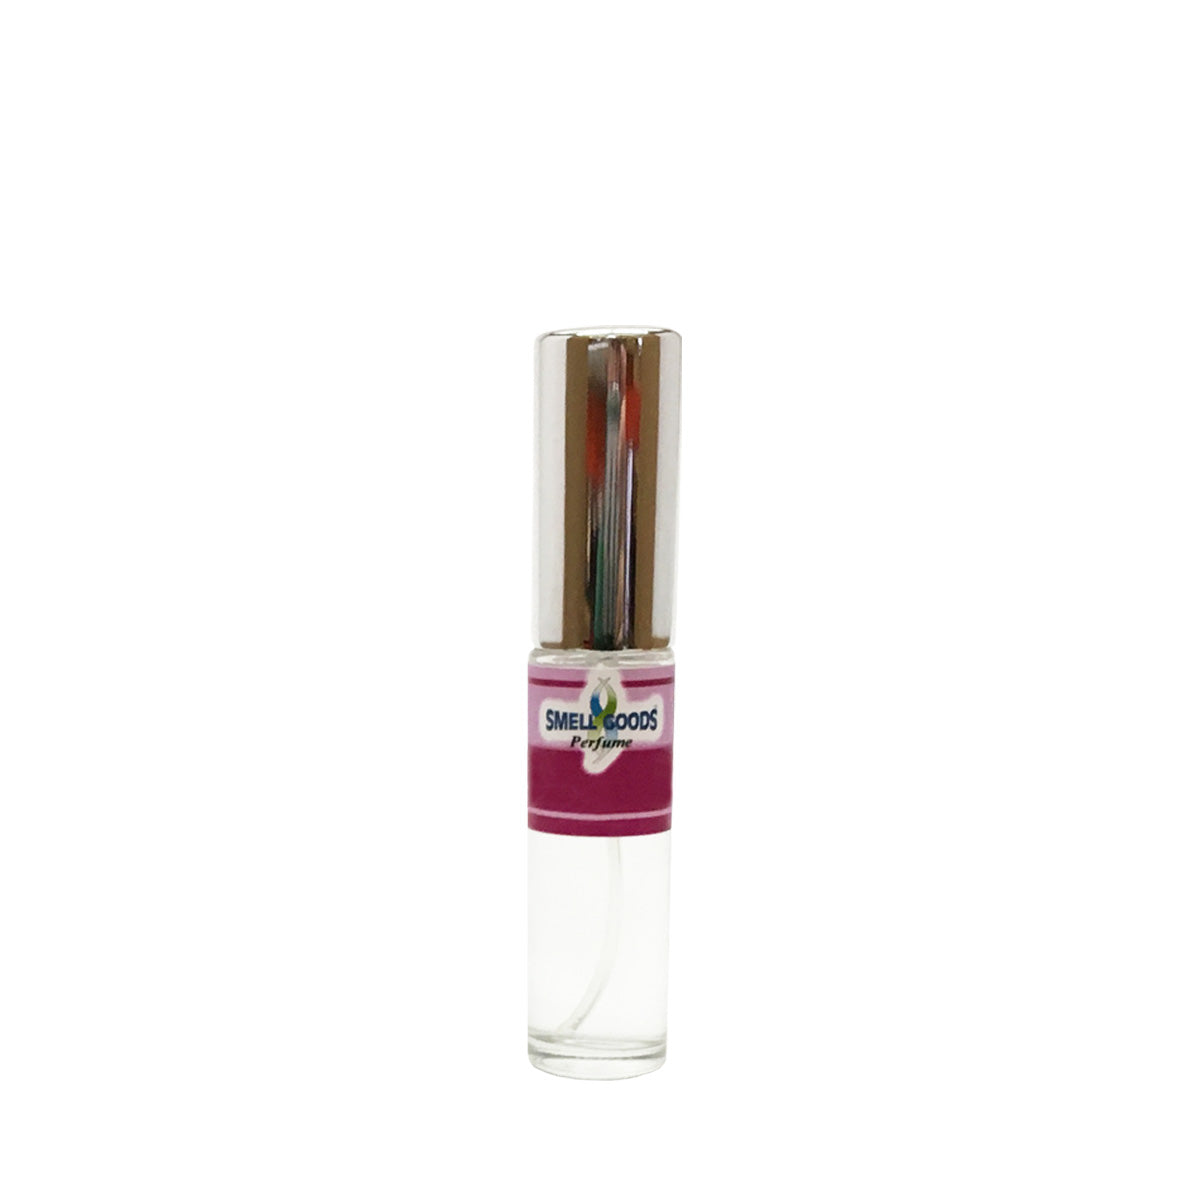 Love Spell Victoria&#039;s Secret perfume - a fragrance for women